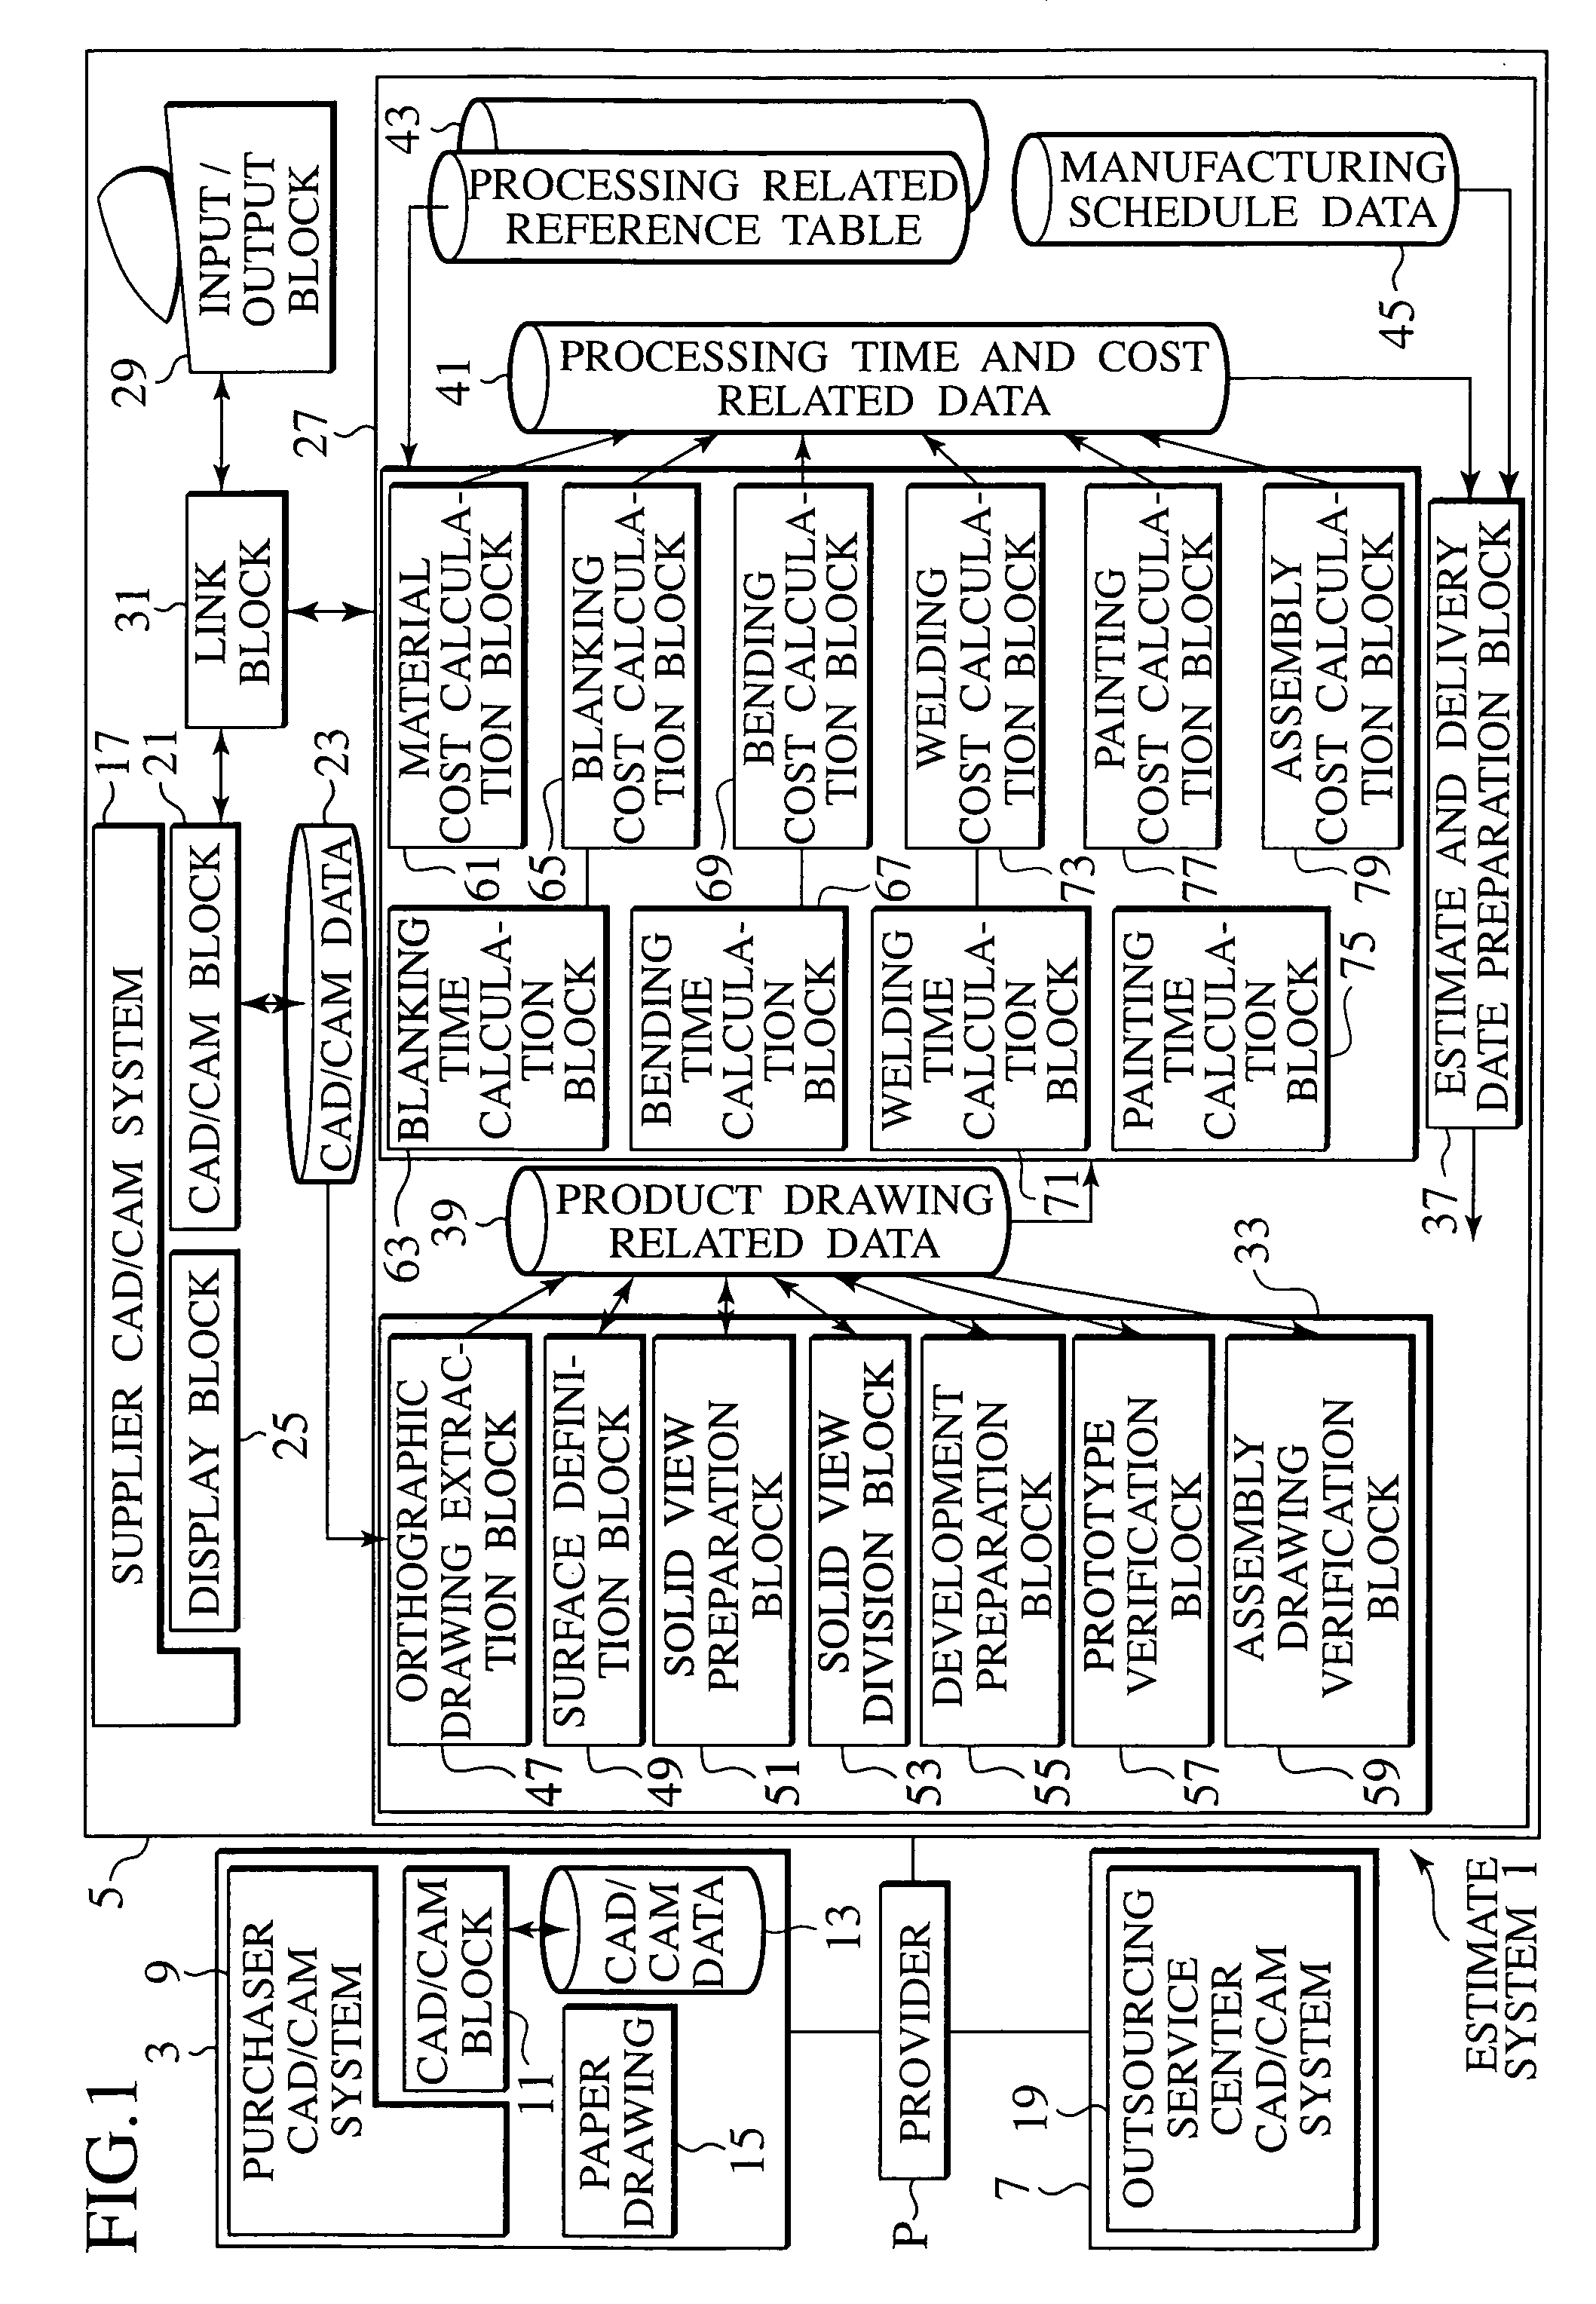 Method of preparing estimate for sheet metal working